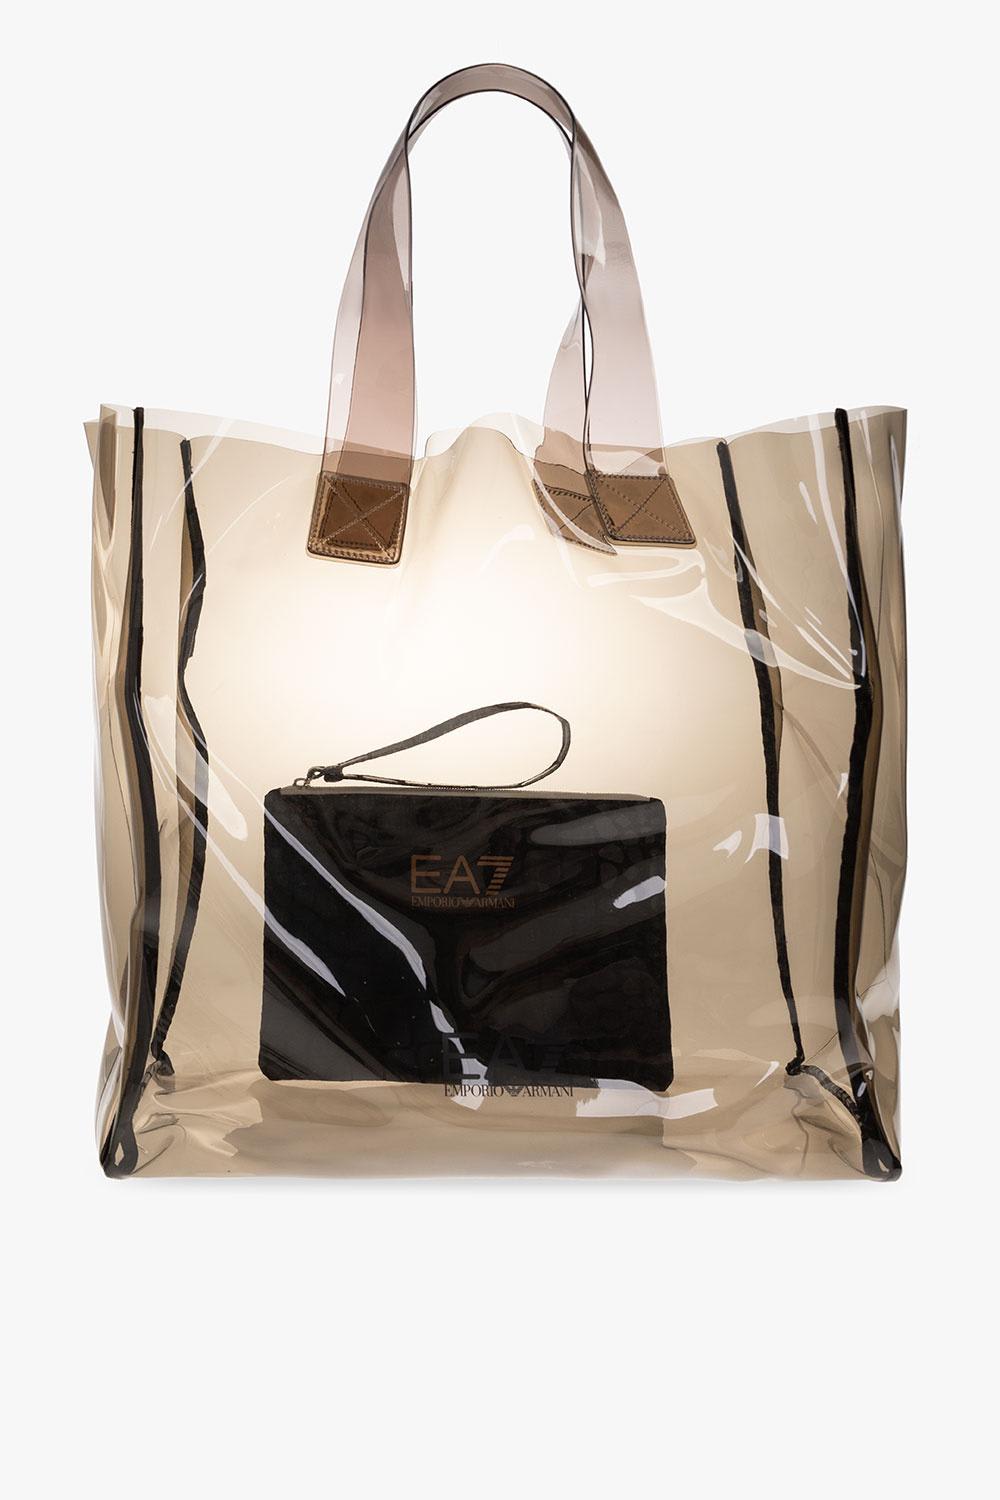 Ea7 Shopper Bag In Grey